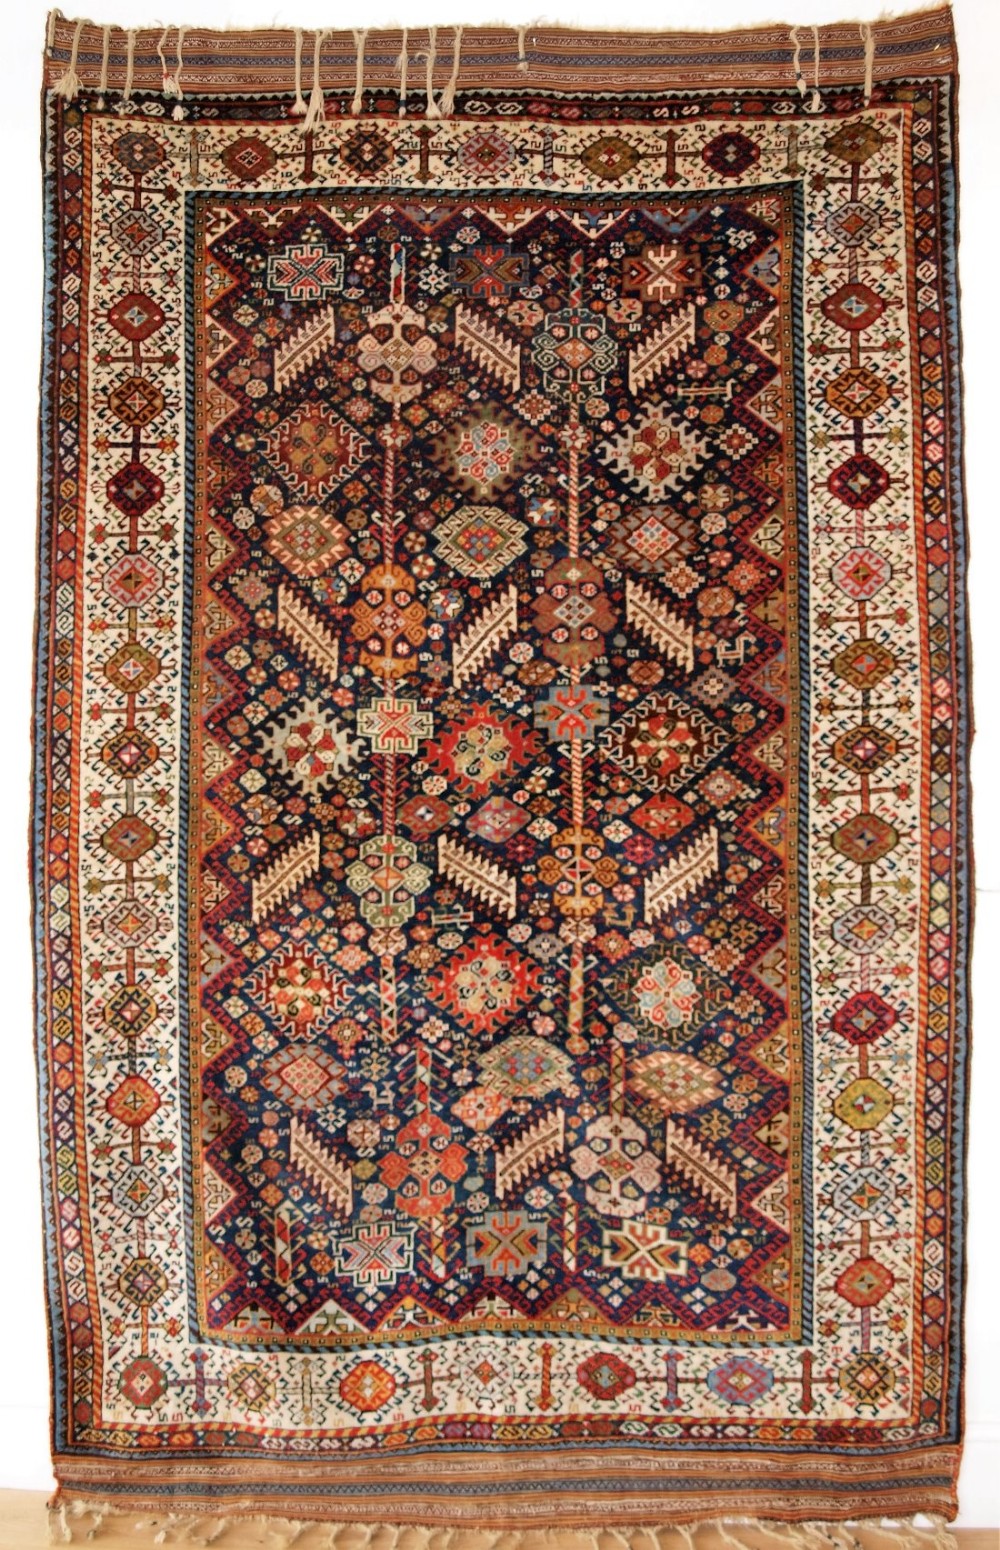 antique south west persian shekarlu qashqai rug excellent design soft wool a superb rug circa 1880